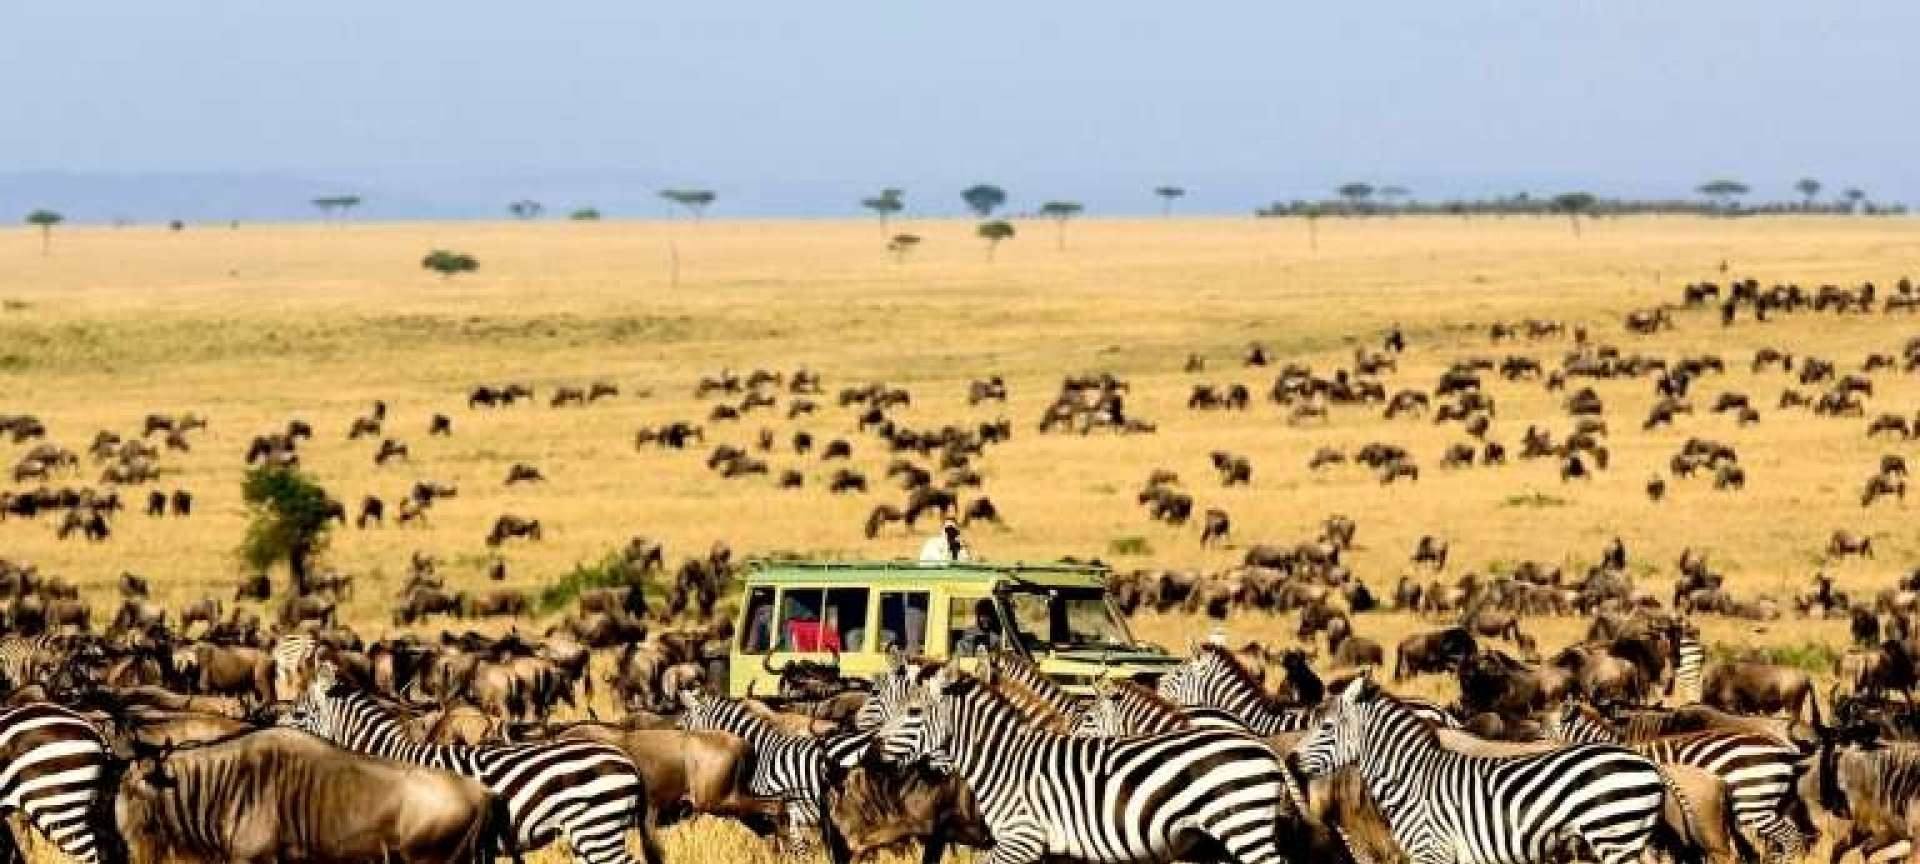 Get Inspired to Explore Safari in Tanzania